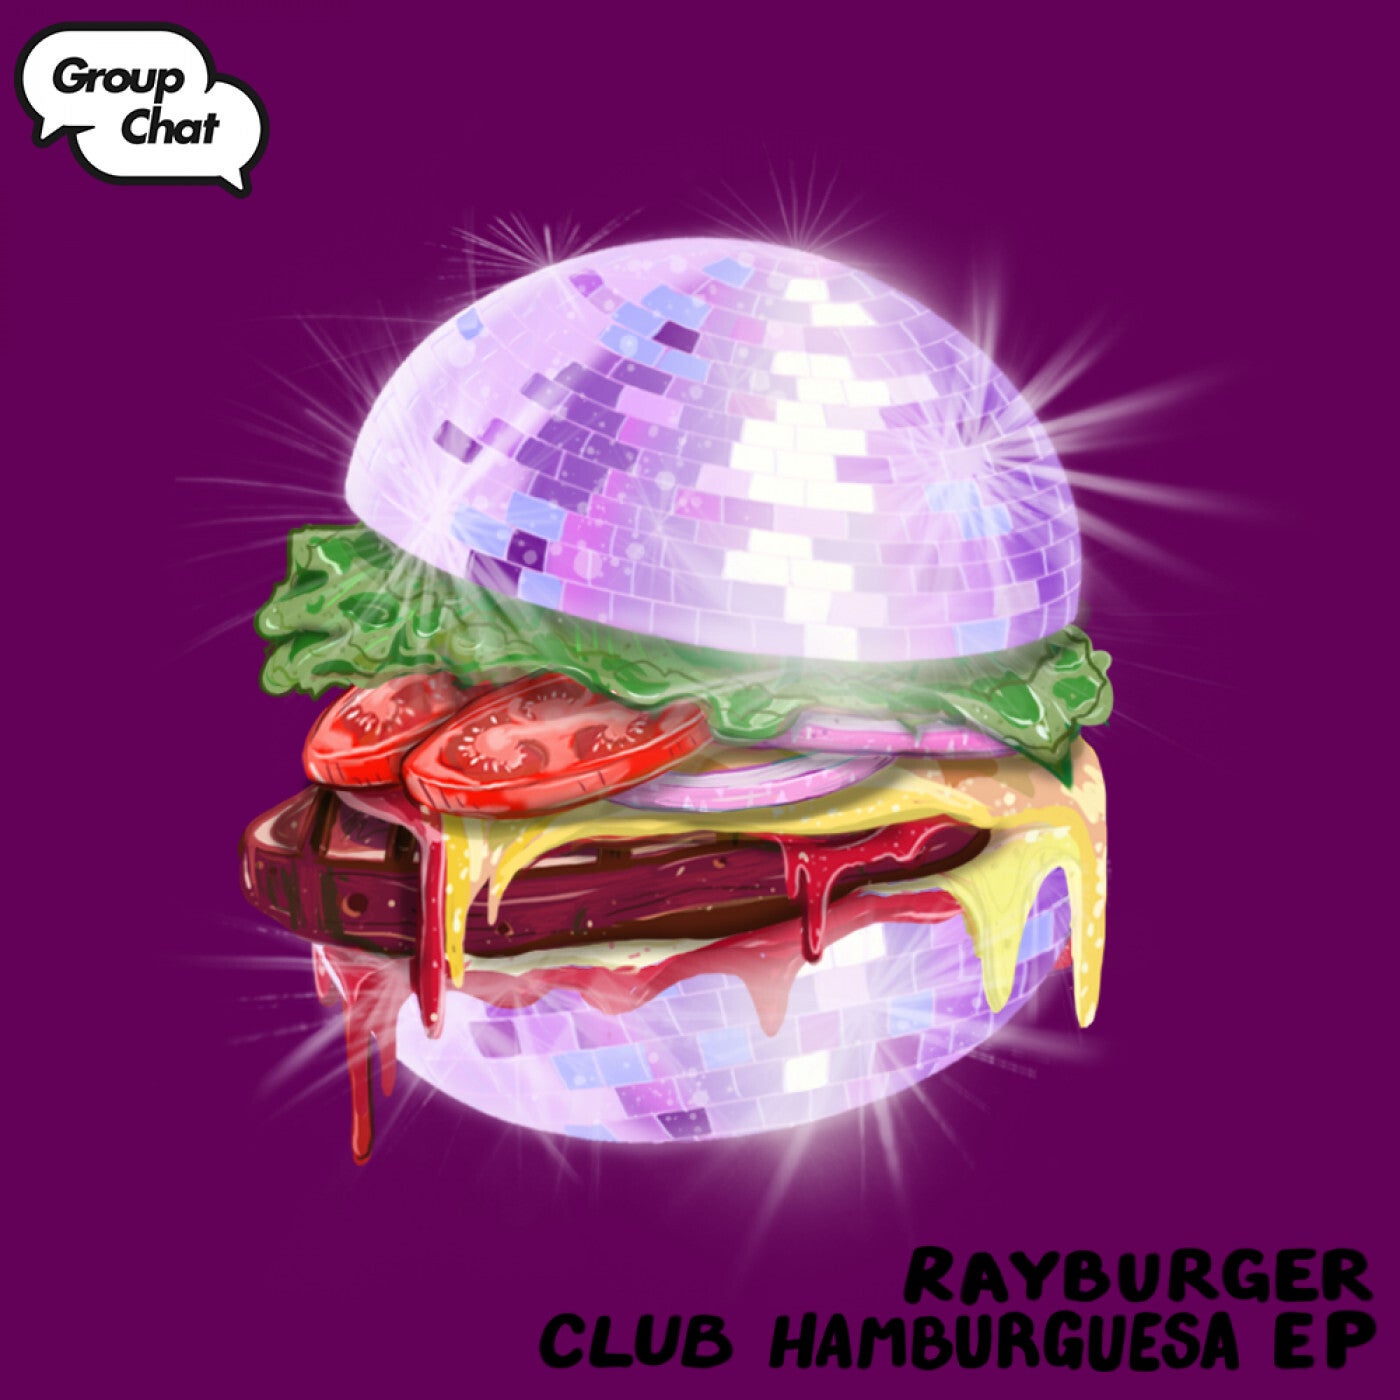 Club Hamburguesa EP